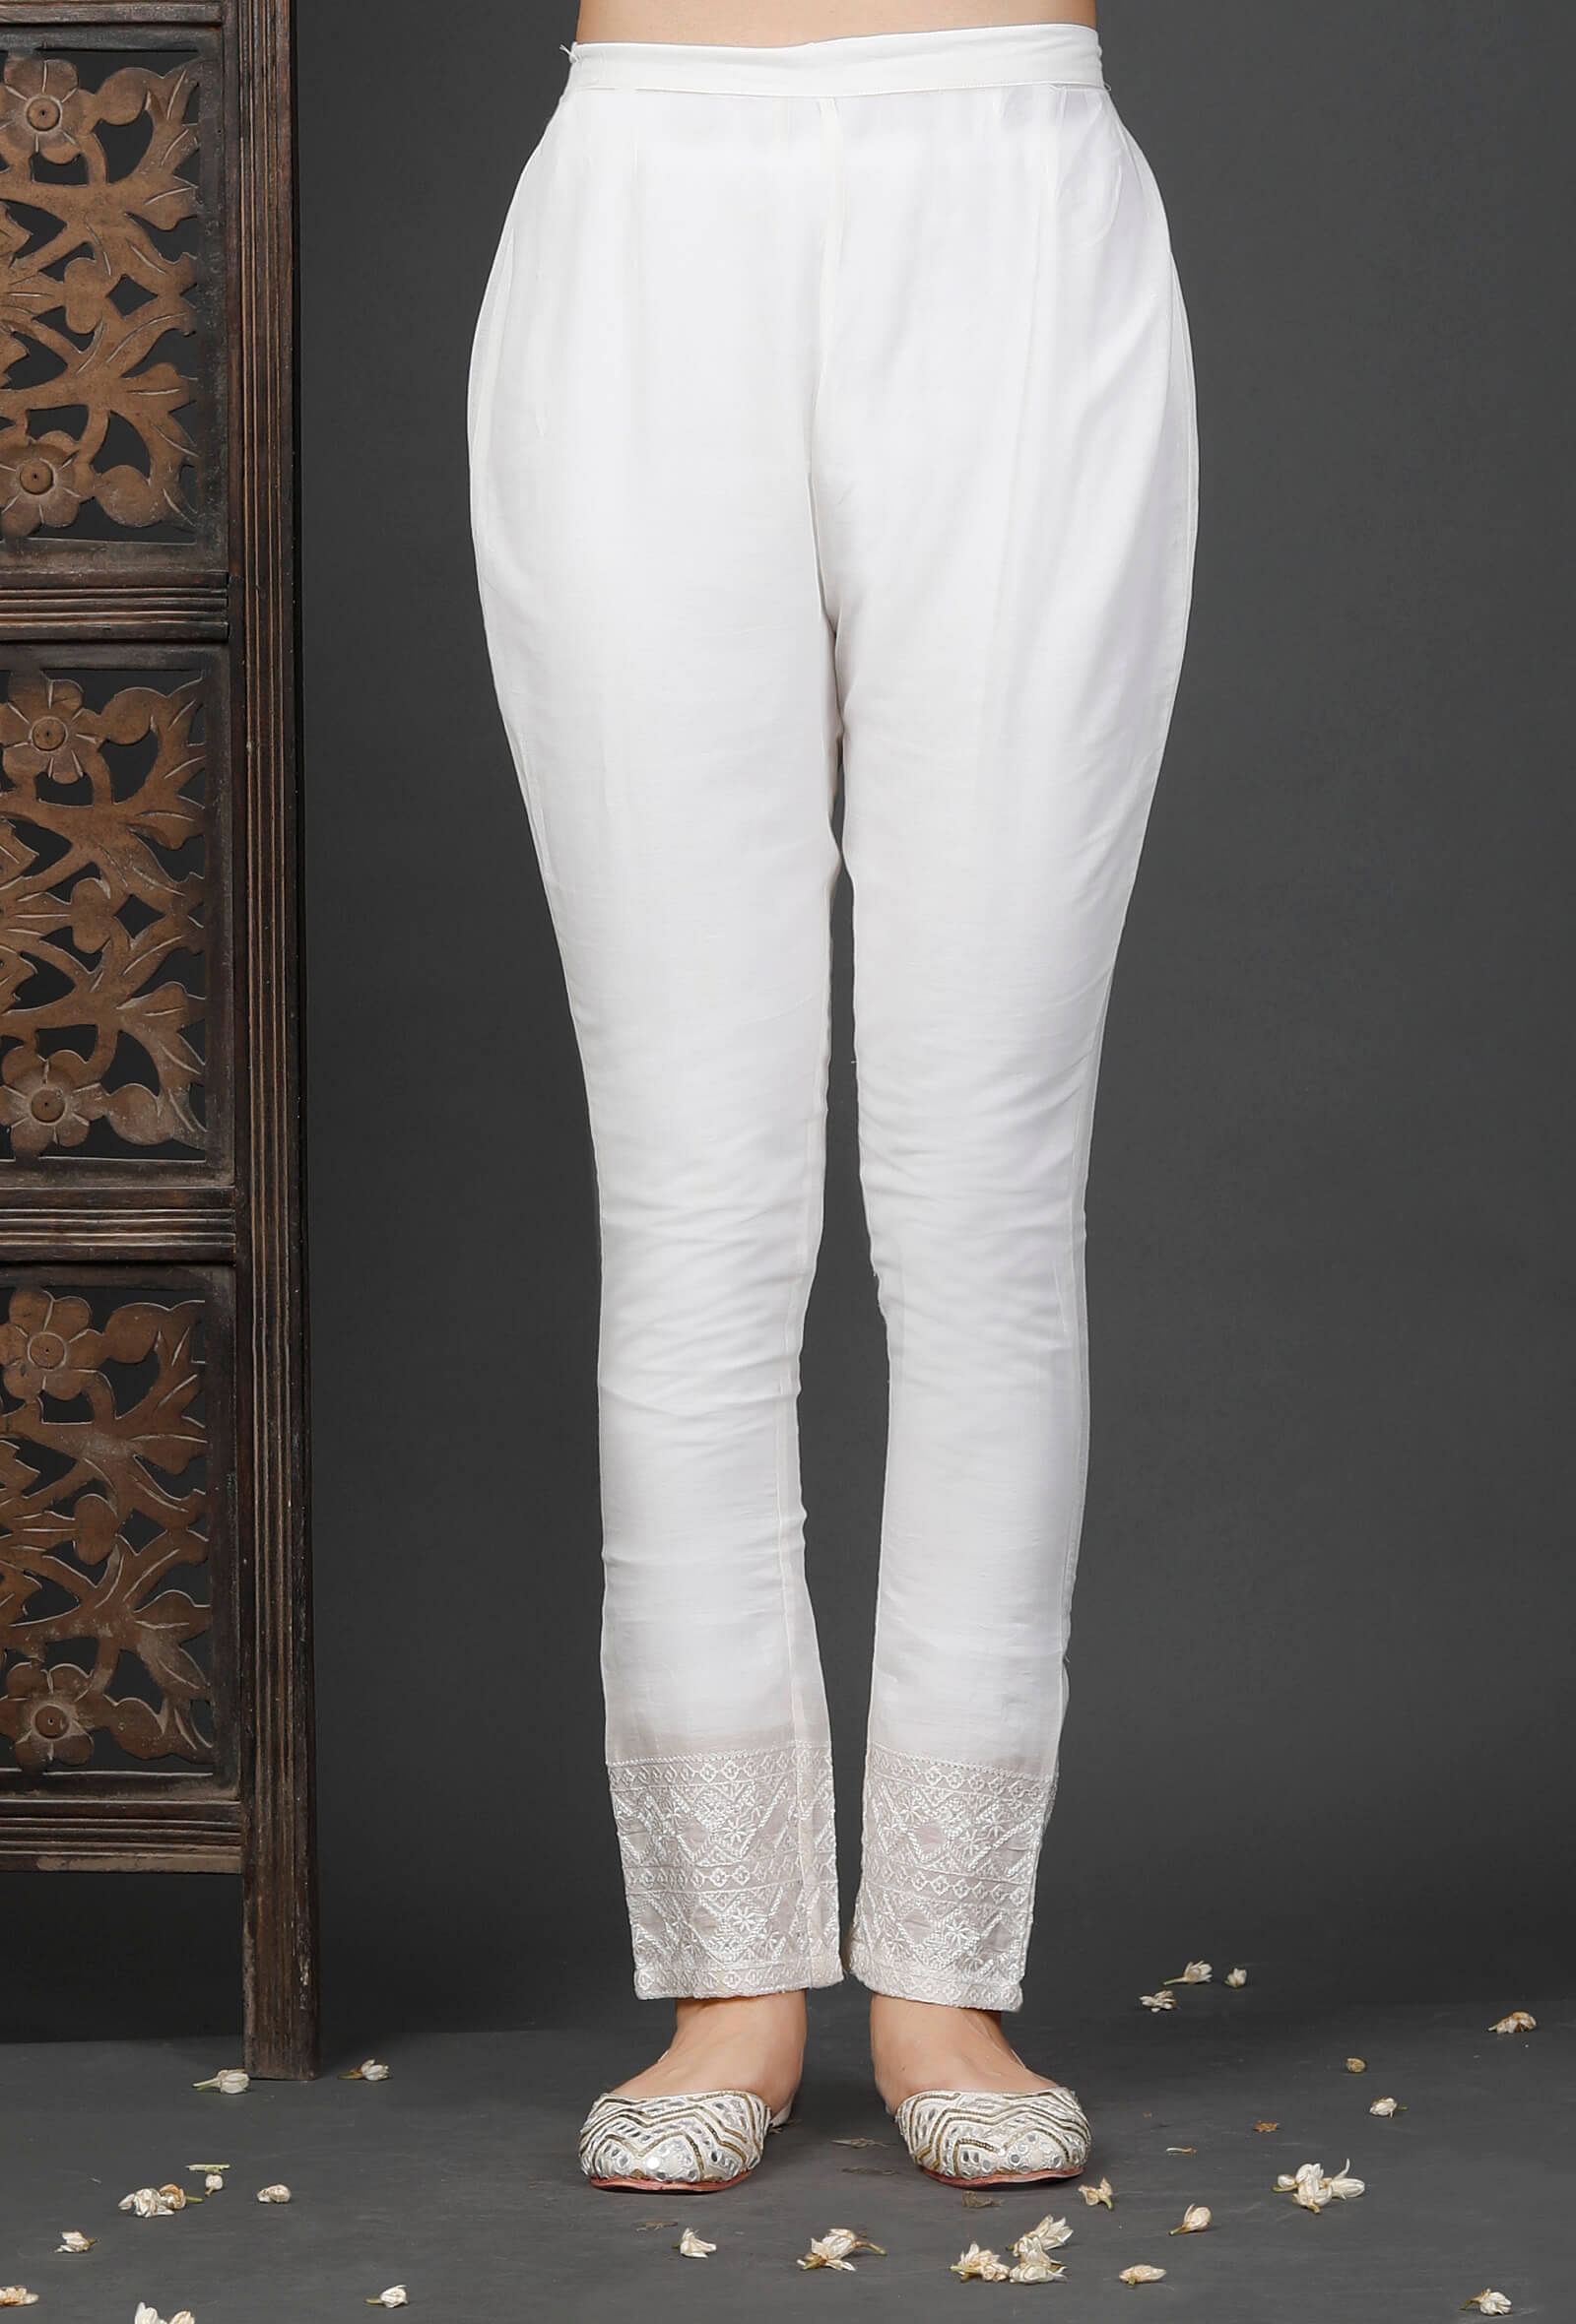 Buy Beige Cotton Linen Straight Trouser Online  FableStreet